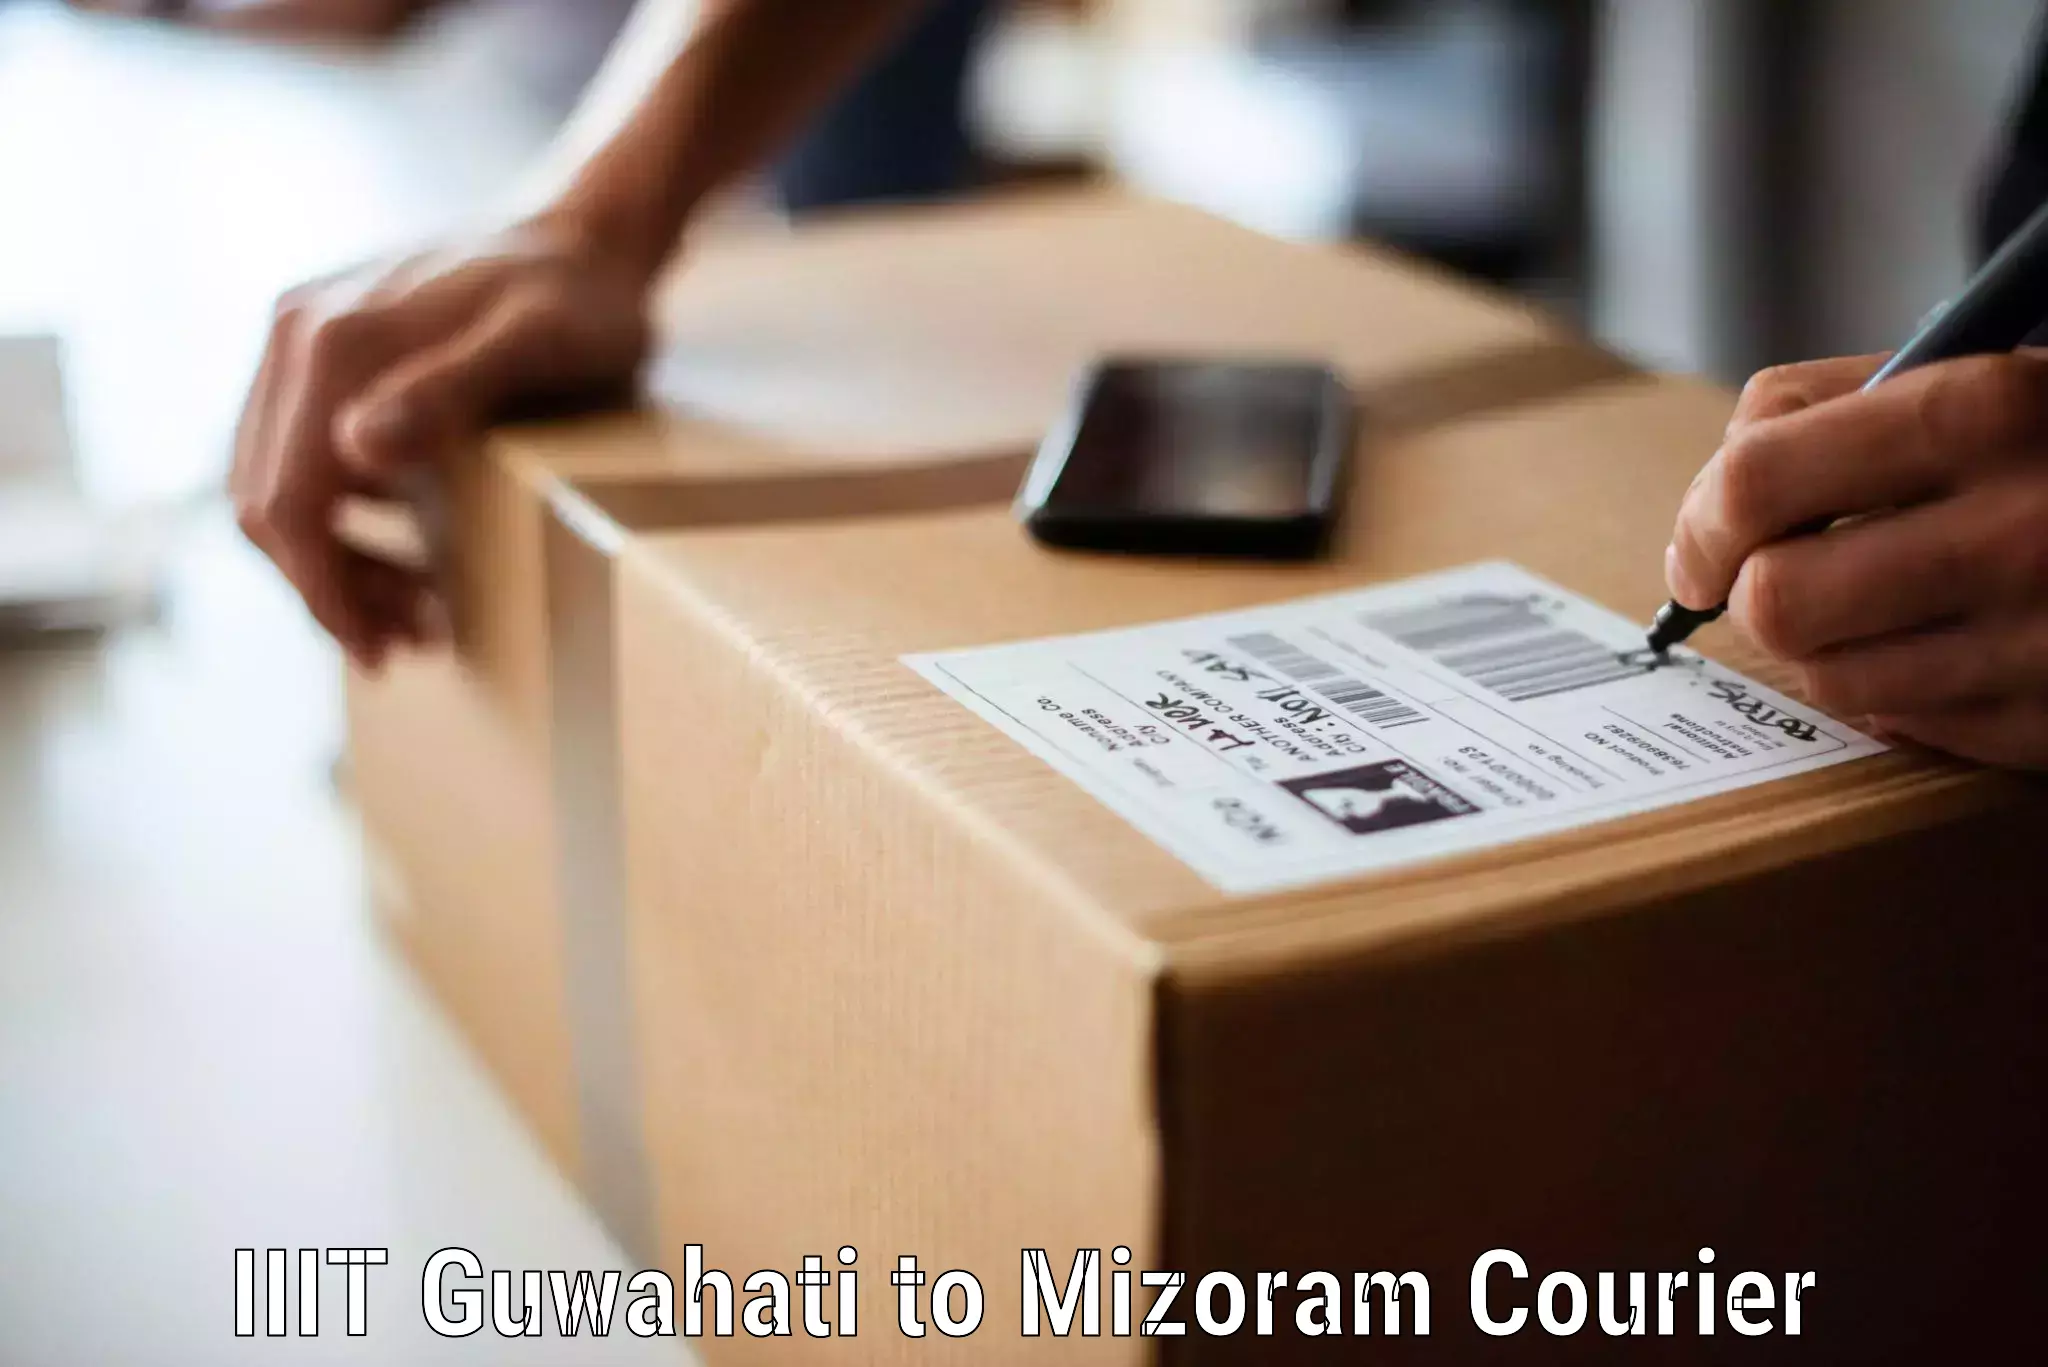 Trusted relocation experts IIIT Guwahati to Mizoram